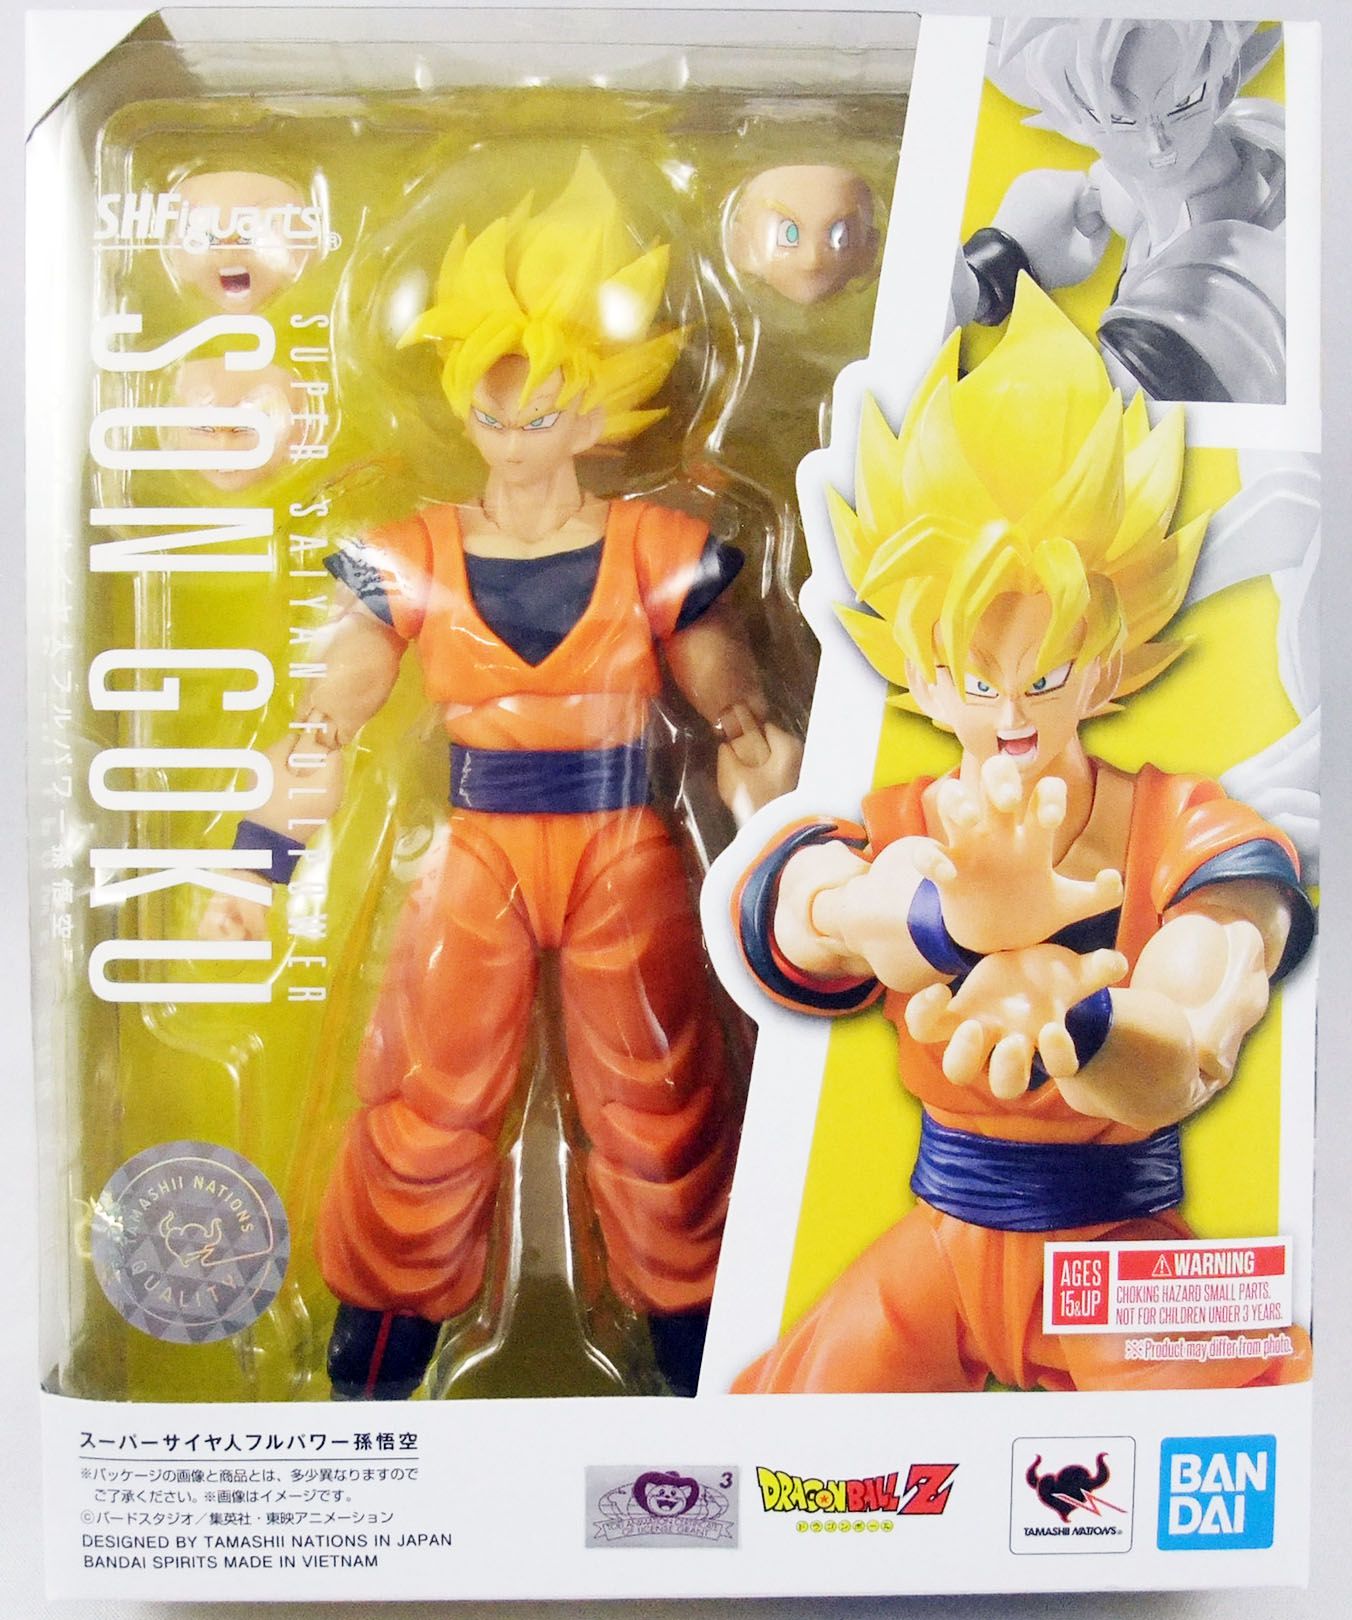 sh figuarts Dragon Ball (NO BOX) - Action Figures & Accessories